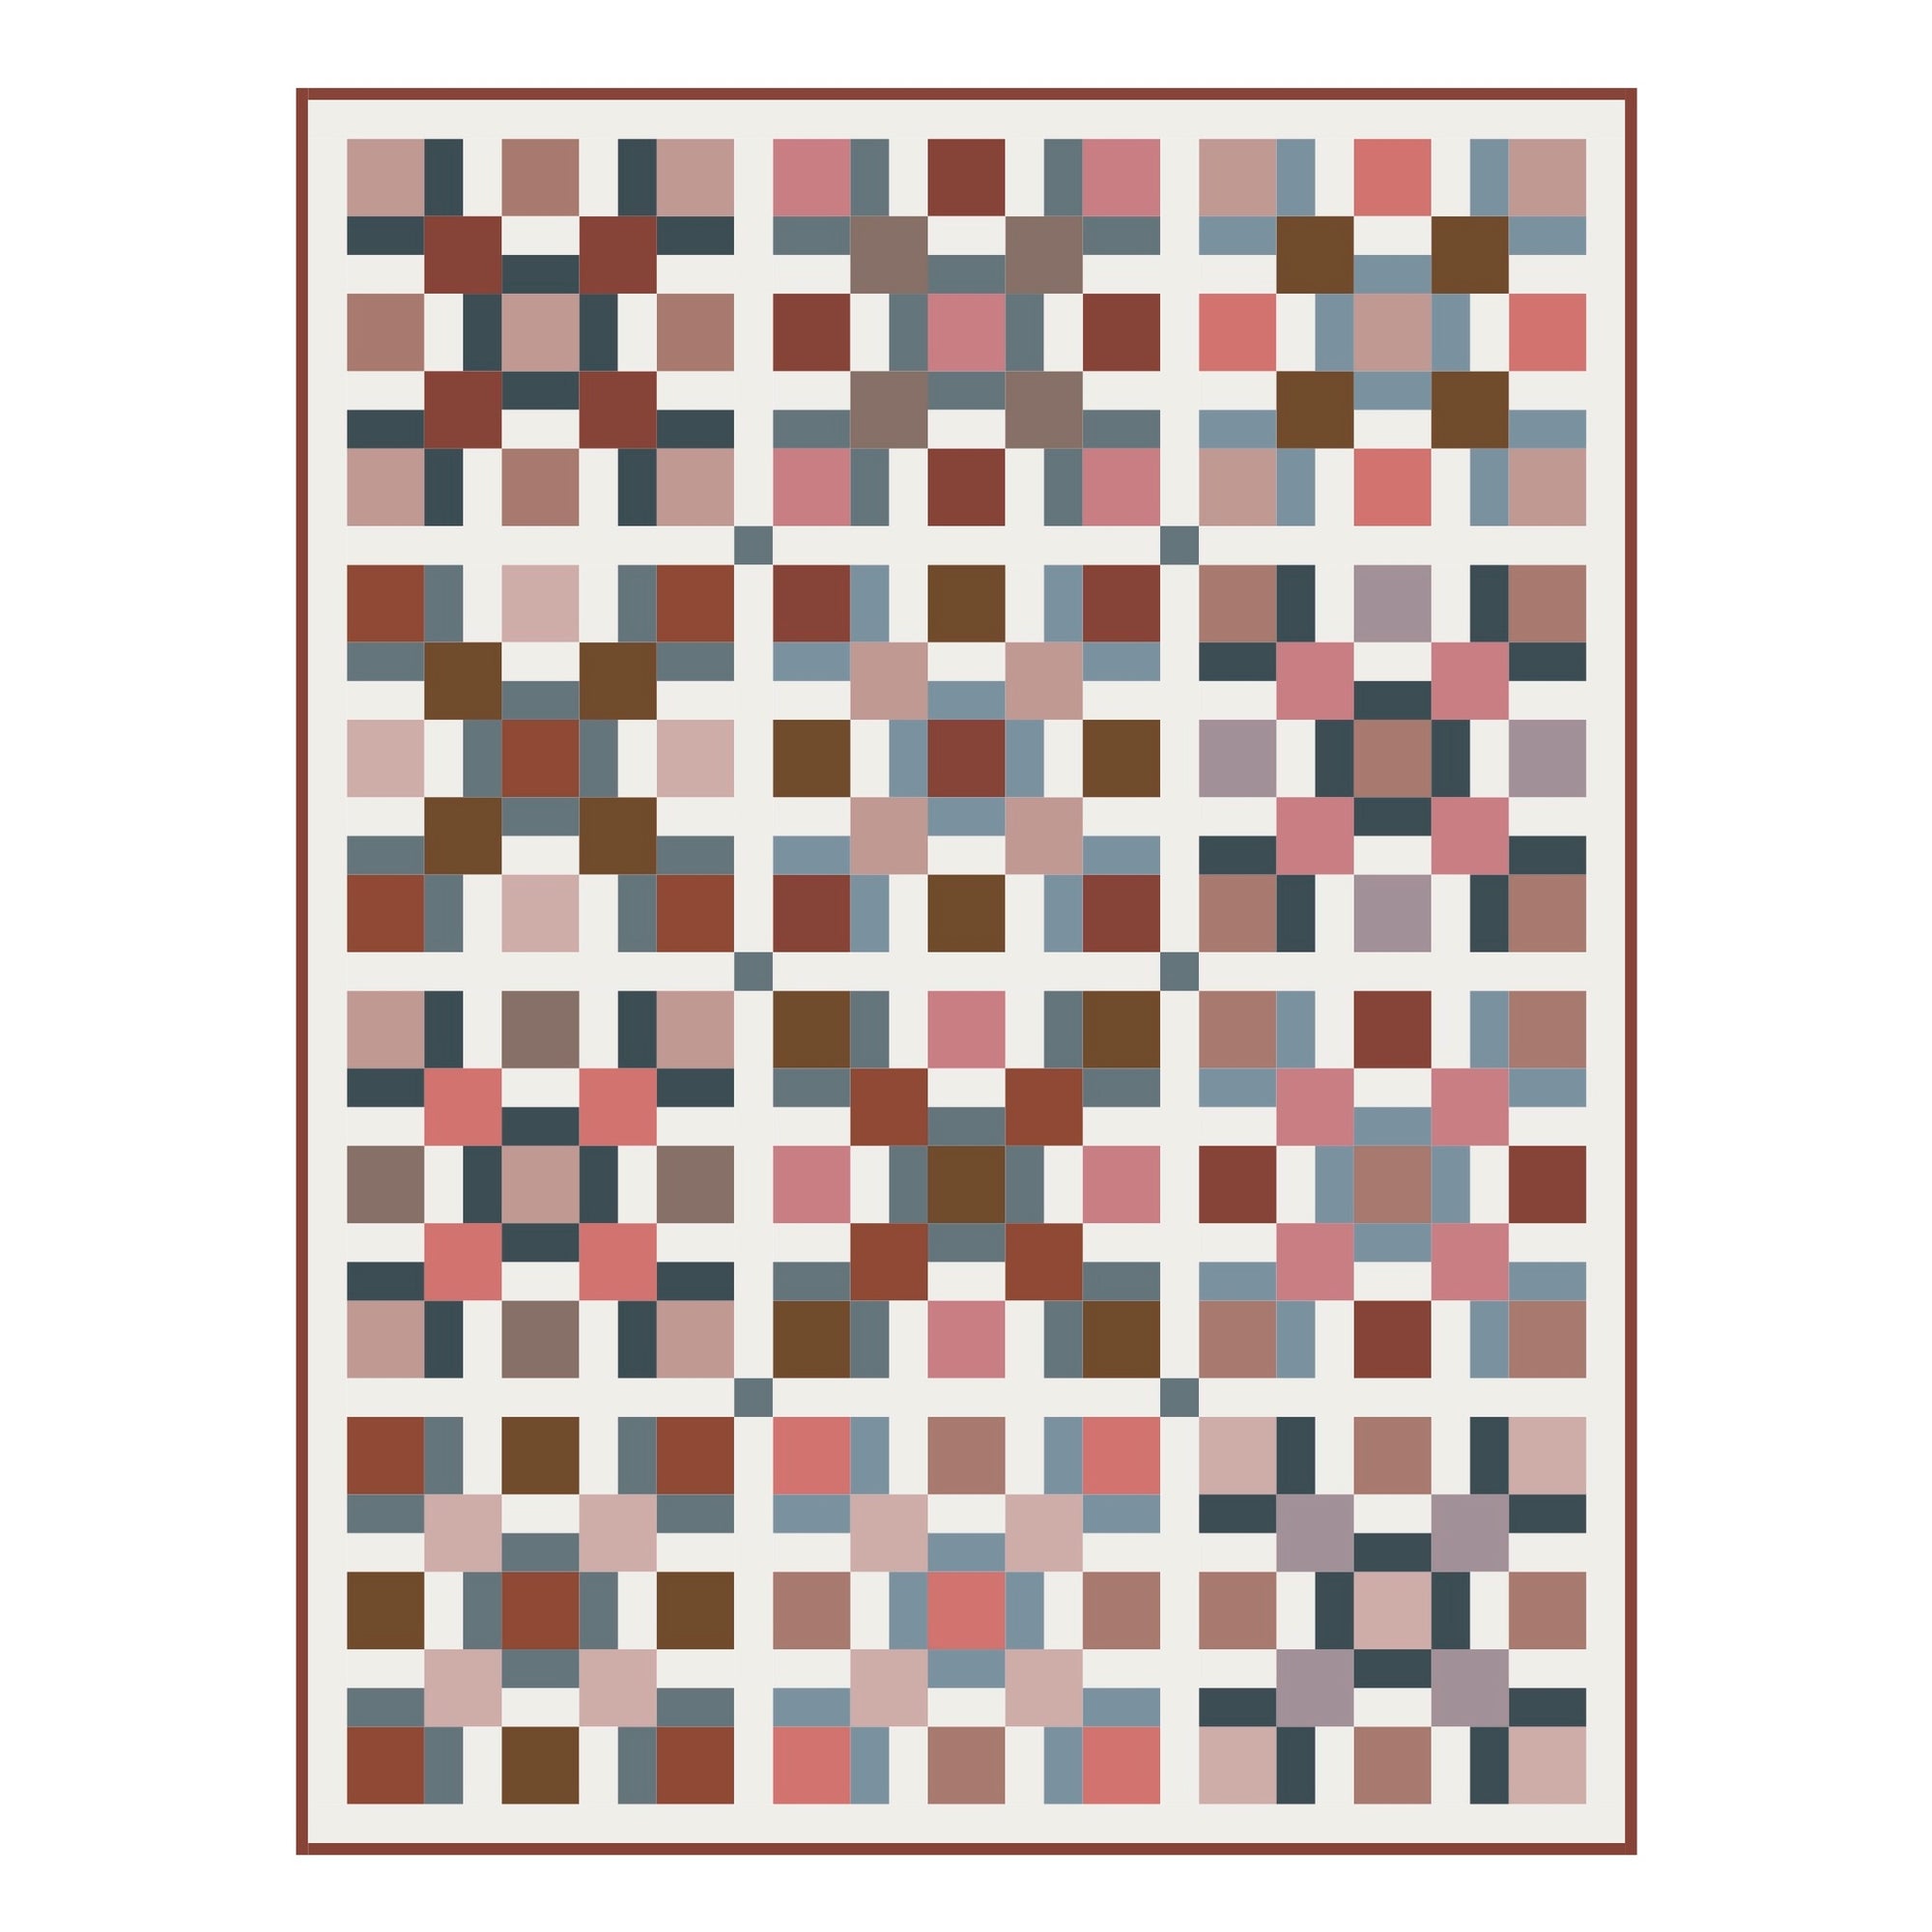 Millie - Quilt Pattern - PDF